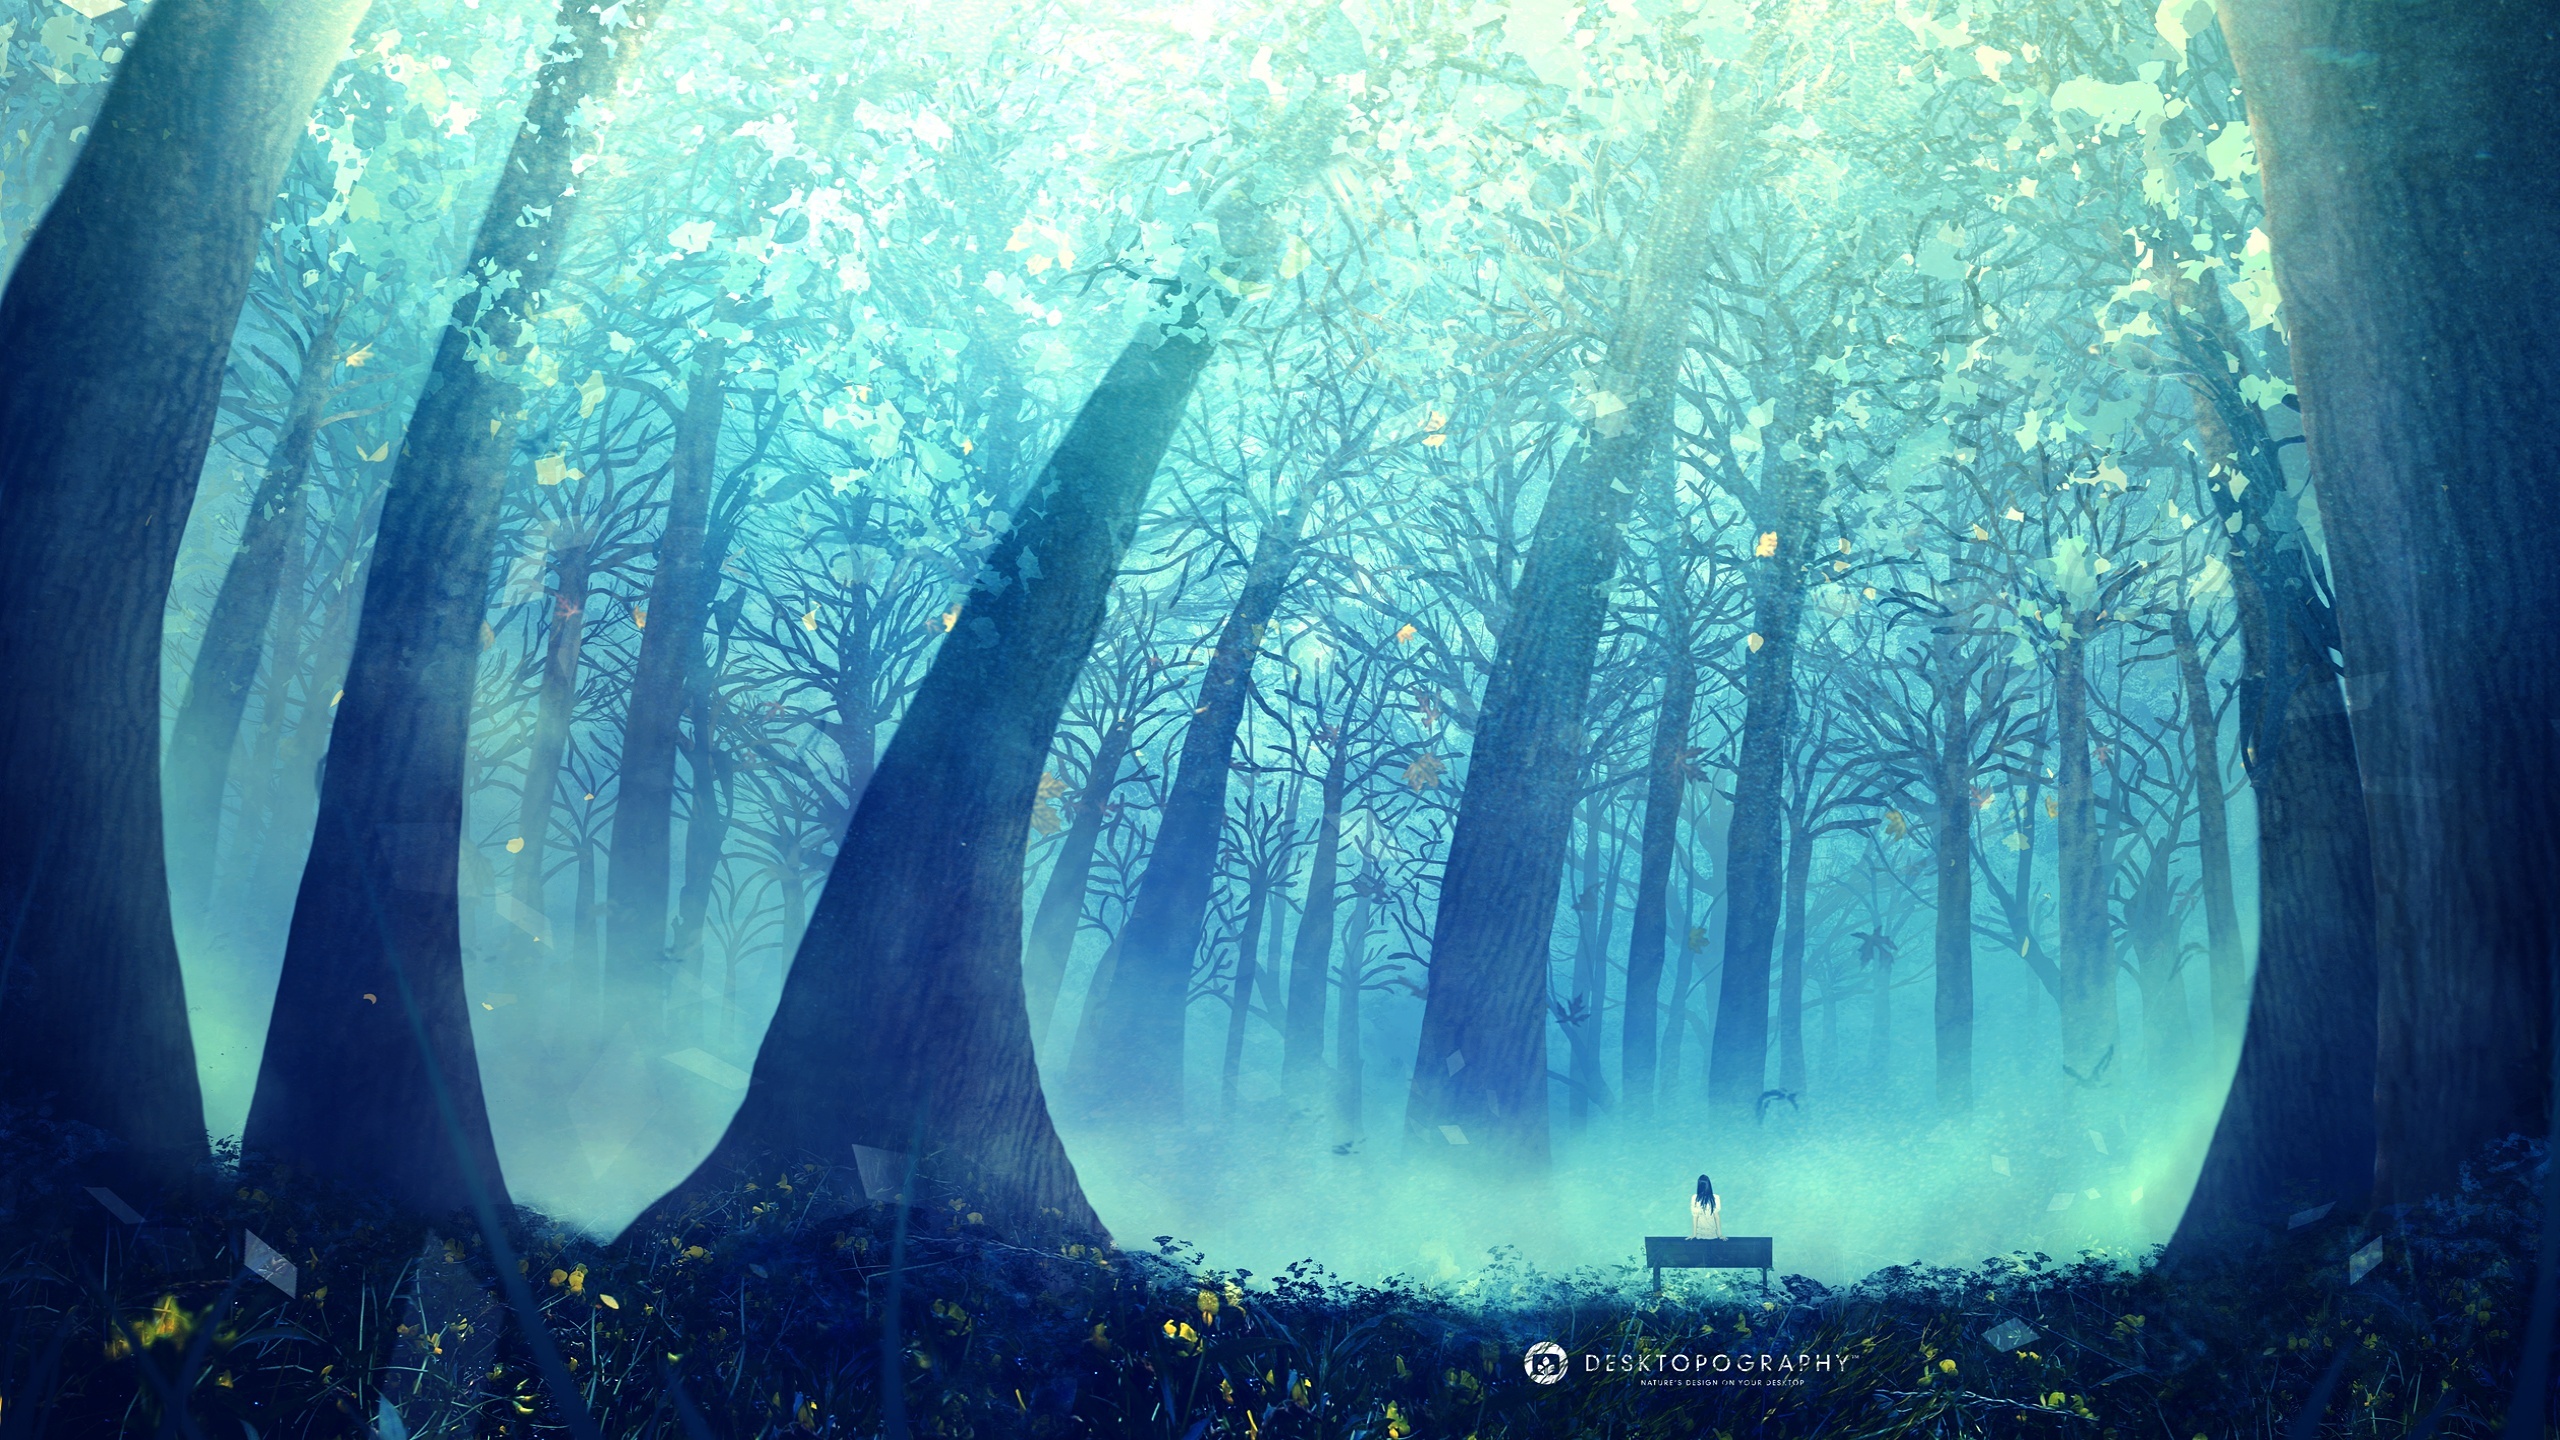 HD wallpaper artistic, desktopography, bench, forest, tree